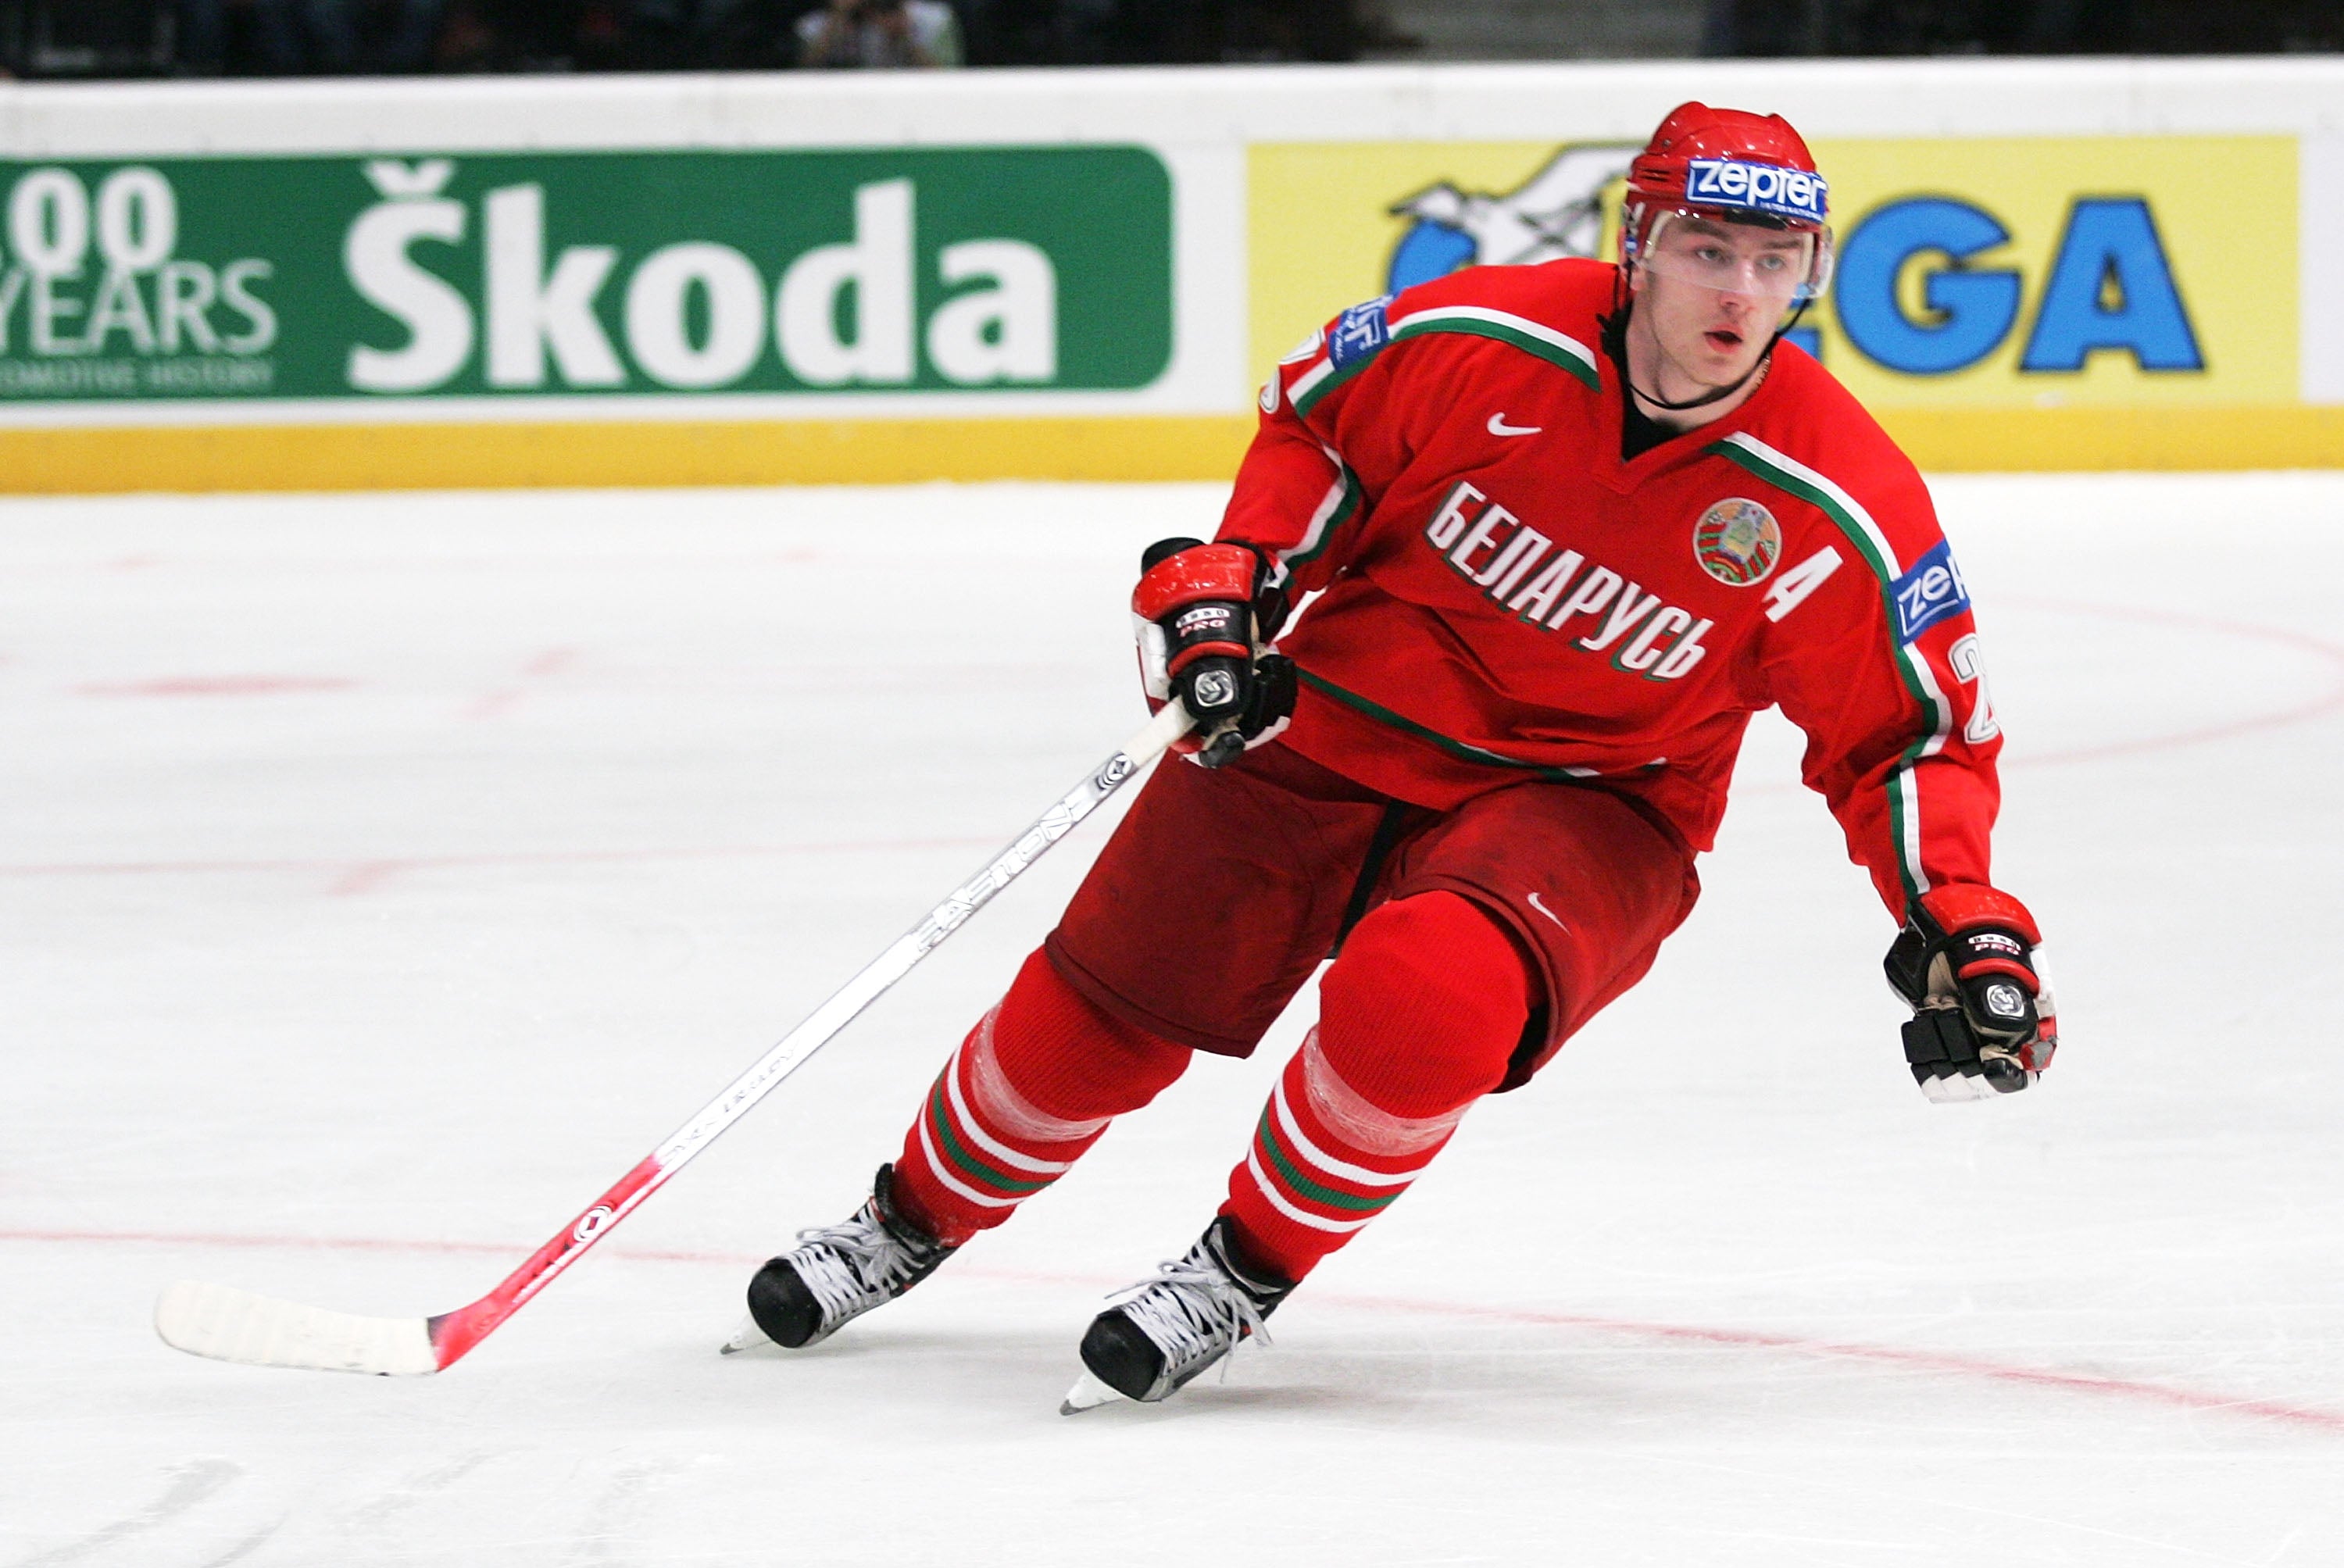 Konstantin Koltsov in action for Belarus at the IIHF World Men’s Championships